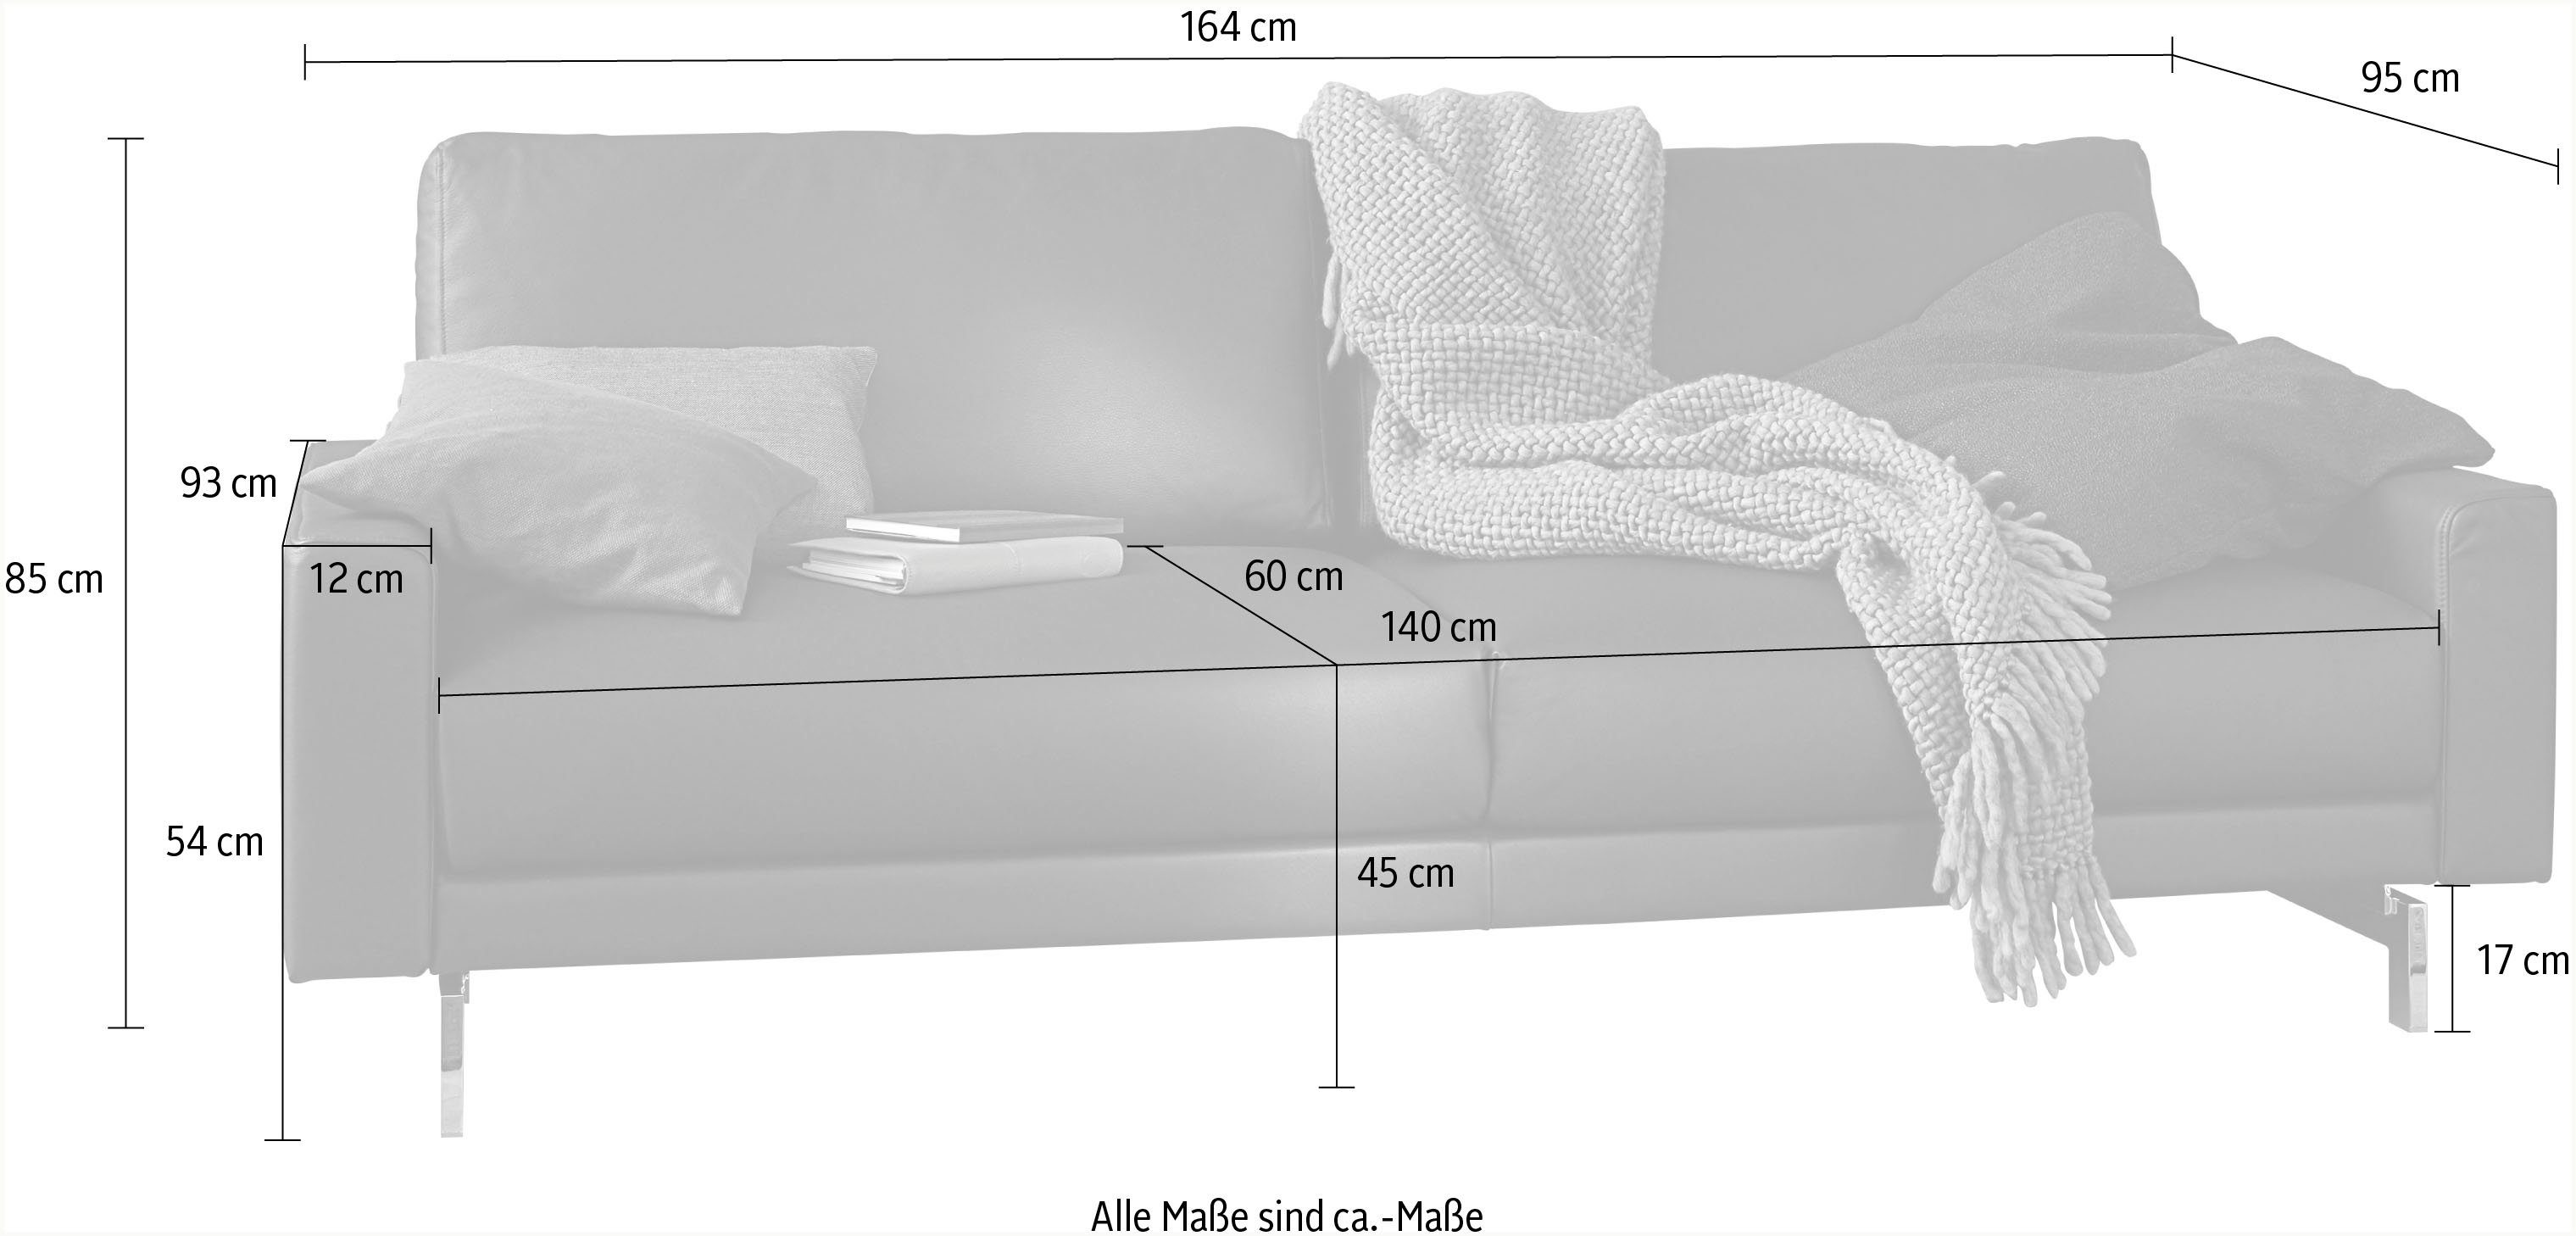 hülsta sofa 2-Sitzer hs.450, Armlehne chromfarben 164 cm niedrig, Breite glänzend, Fuß